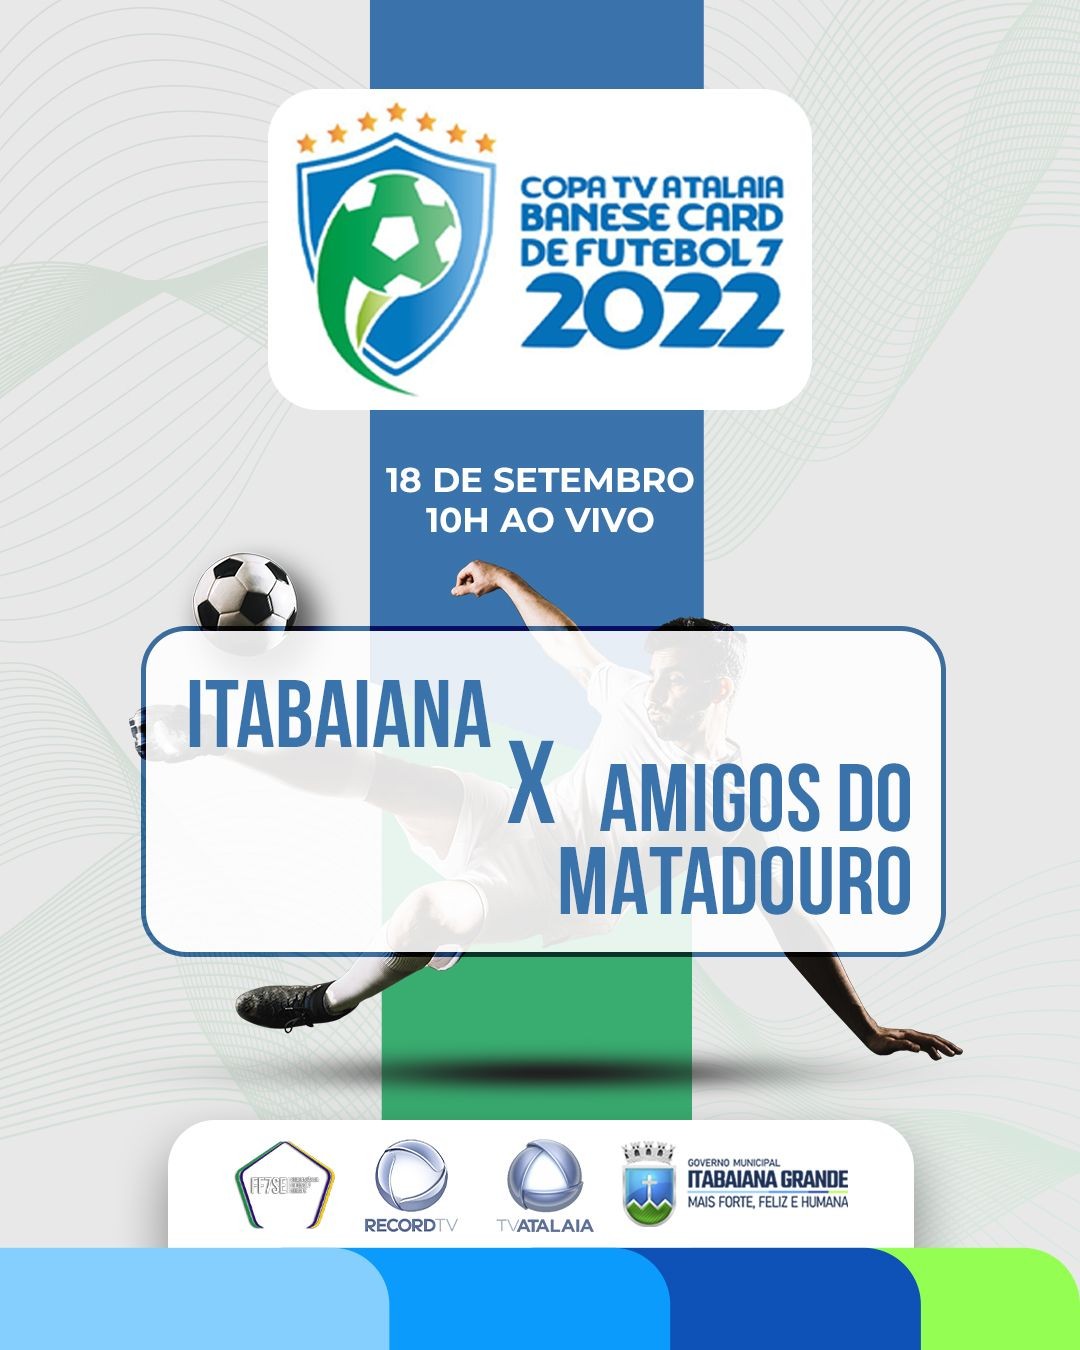 Copa Banese Card TV Atalaia de Fut7 inicia domingo, em Itabaiana